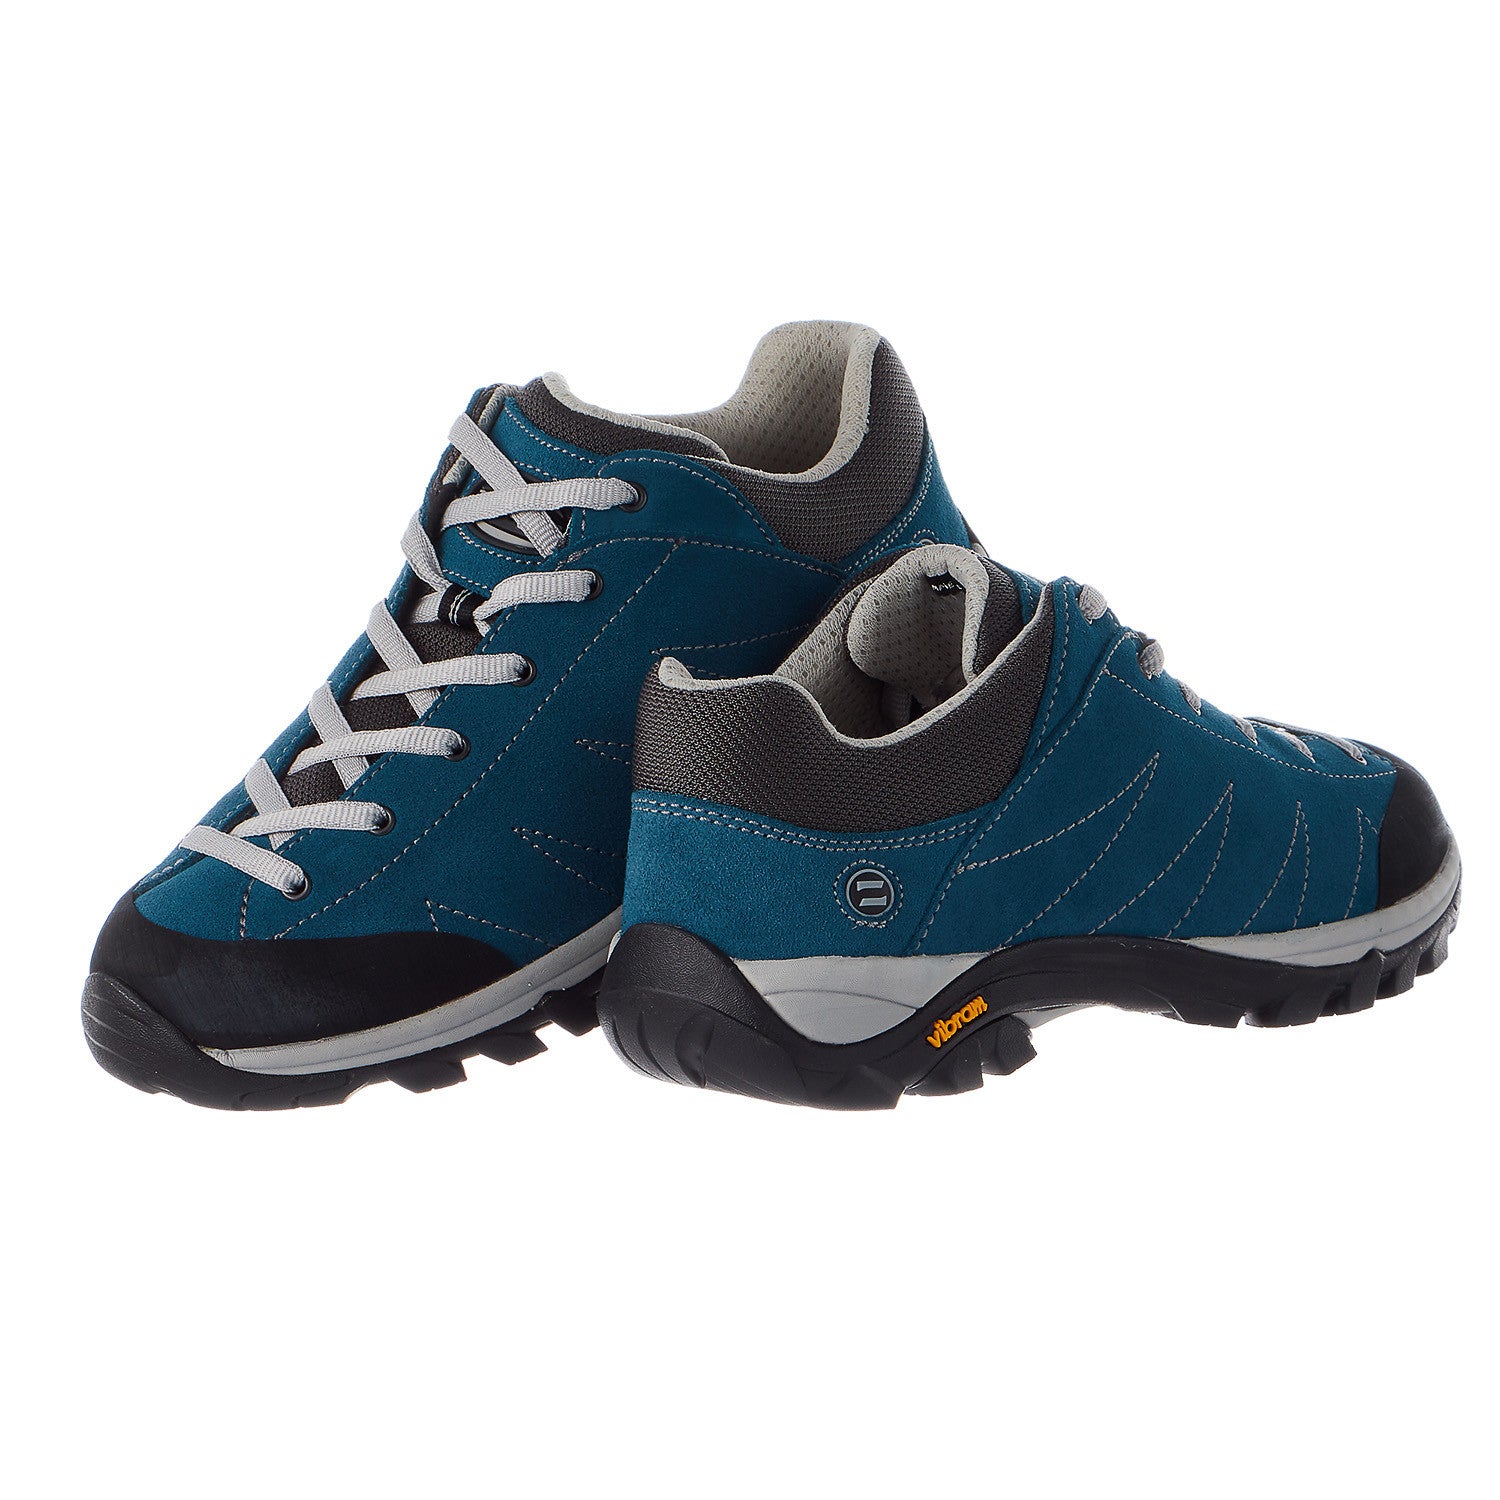 Zamberlan 103 HIKE RR Leather Hiking Shoes - Women's - Shoplifestyle